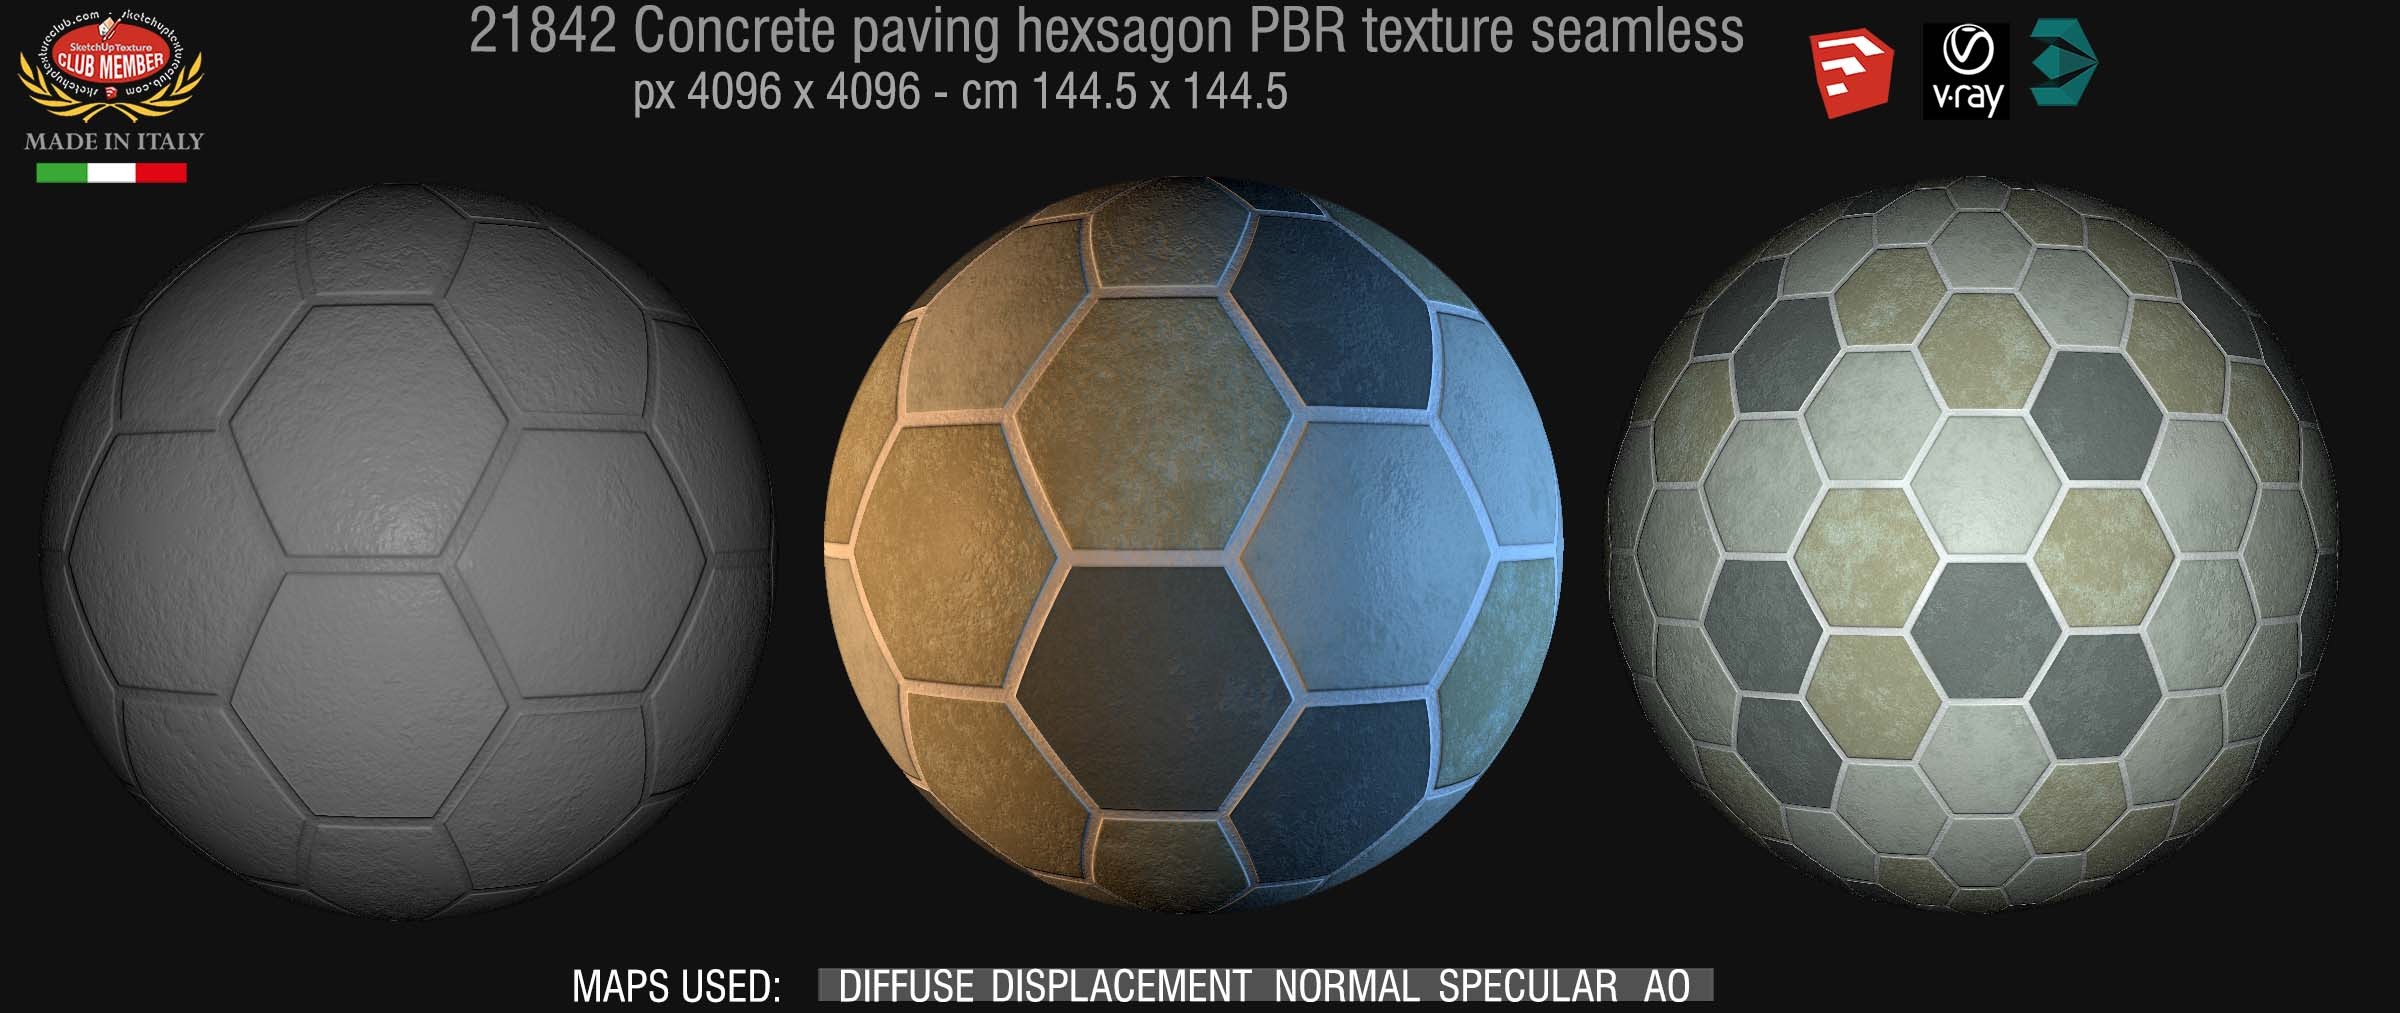 21842 Concrete paving hexagon PBR texture seamless DEMO